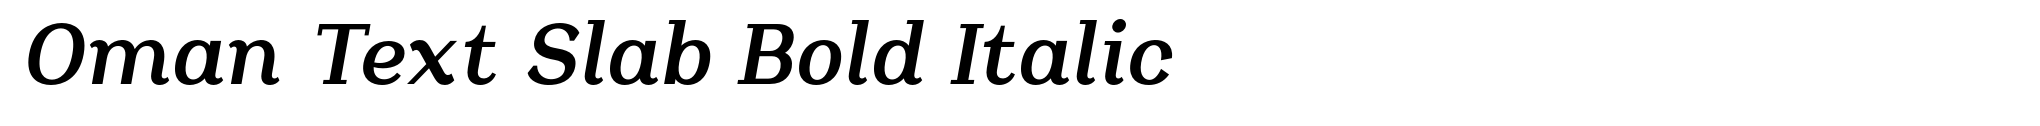 Oman Text Slab Bold Italic image